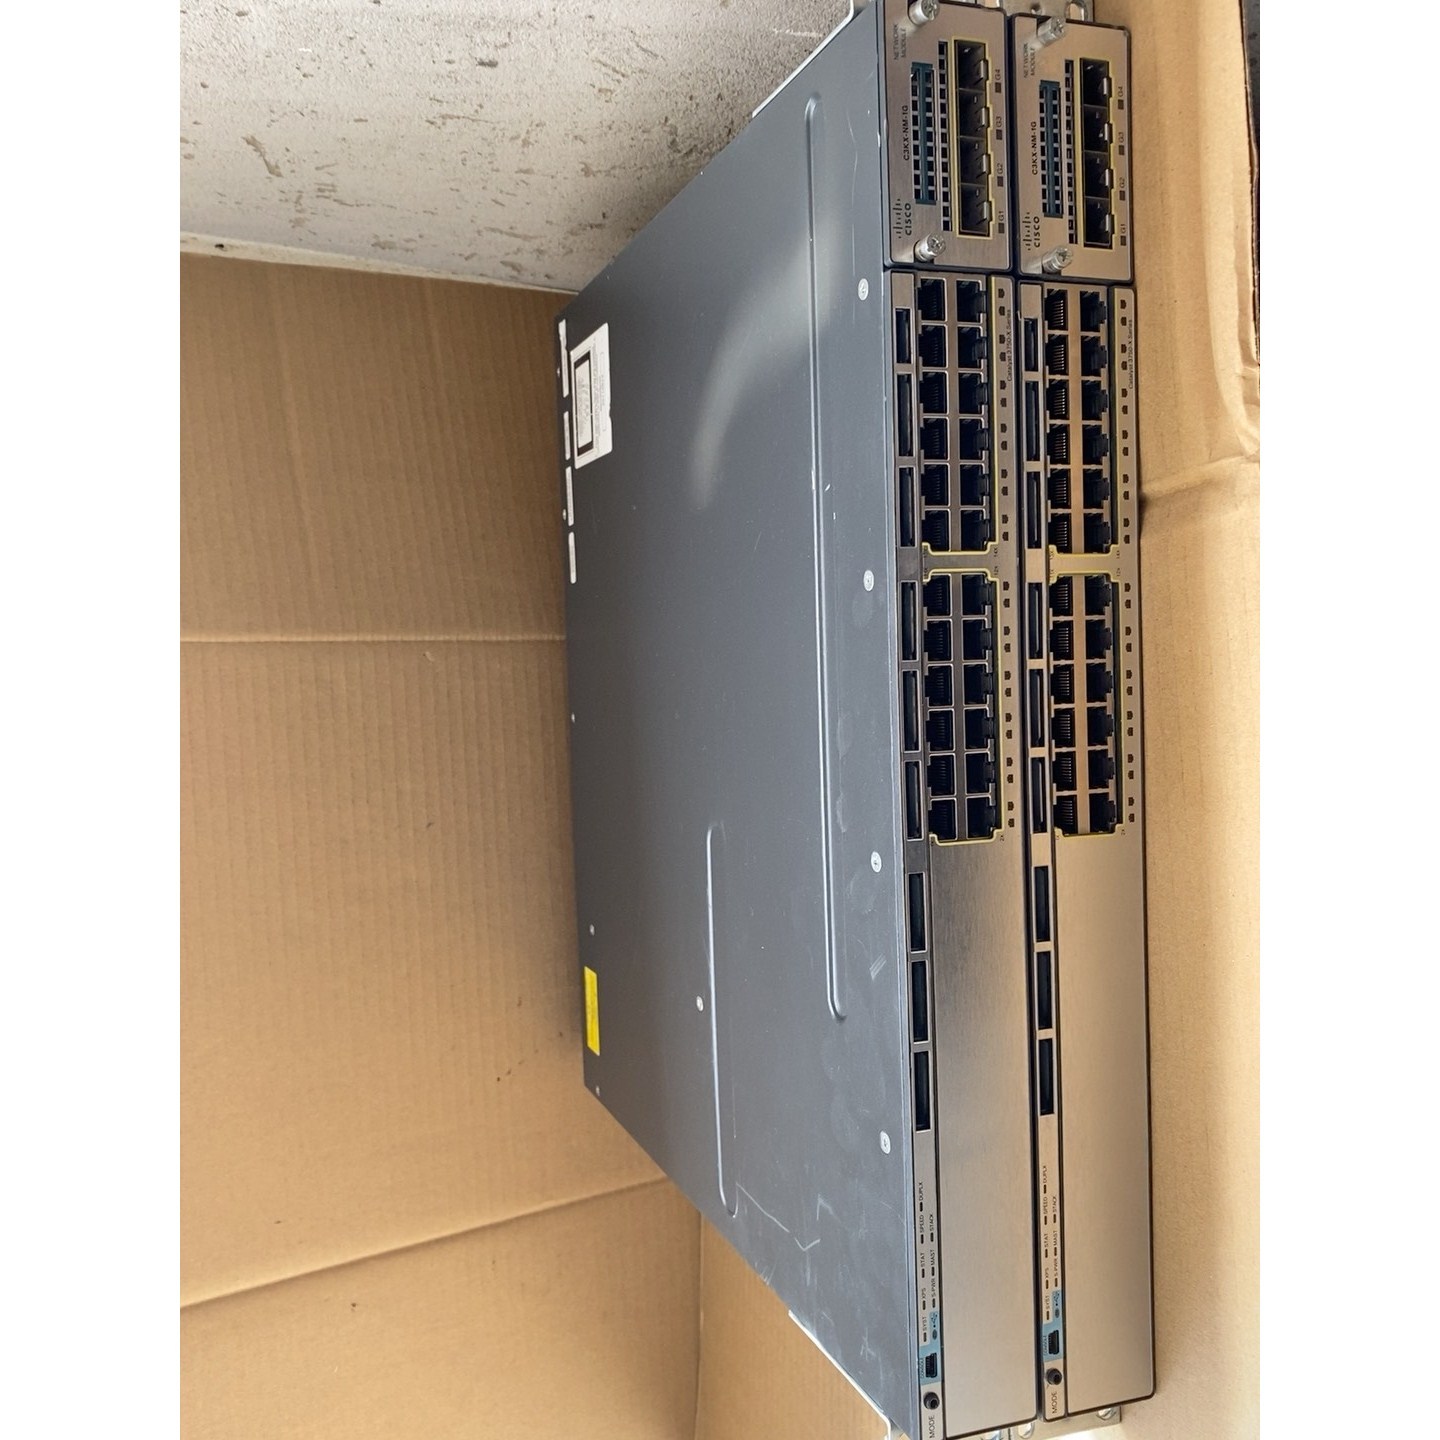 Cisco WS-C3750X-24T-S双电源、端口功能议价